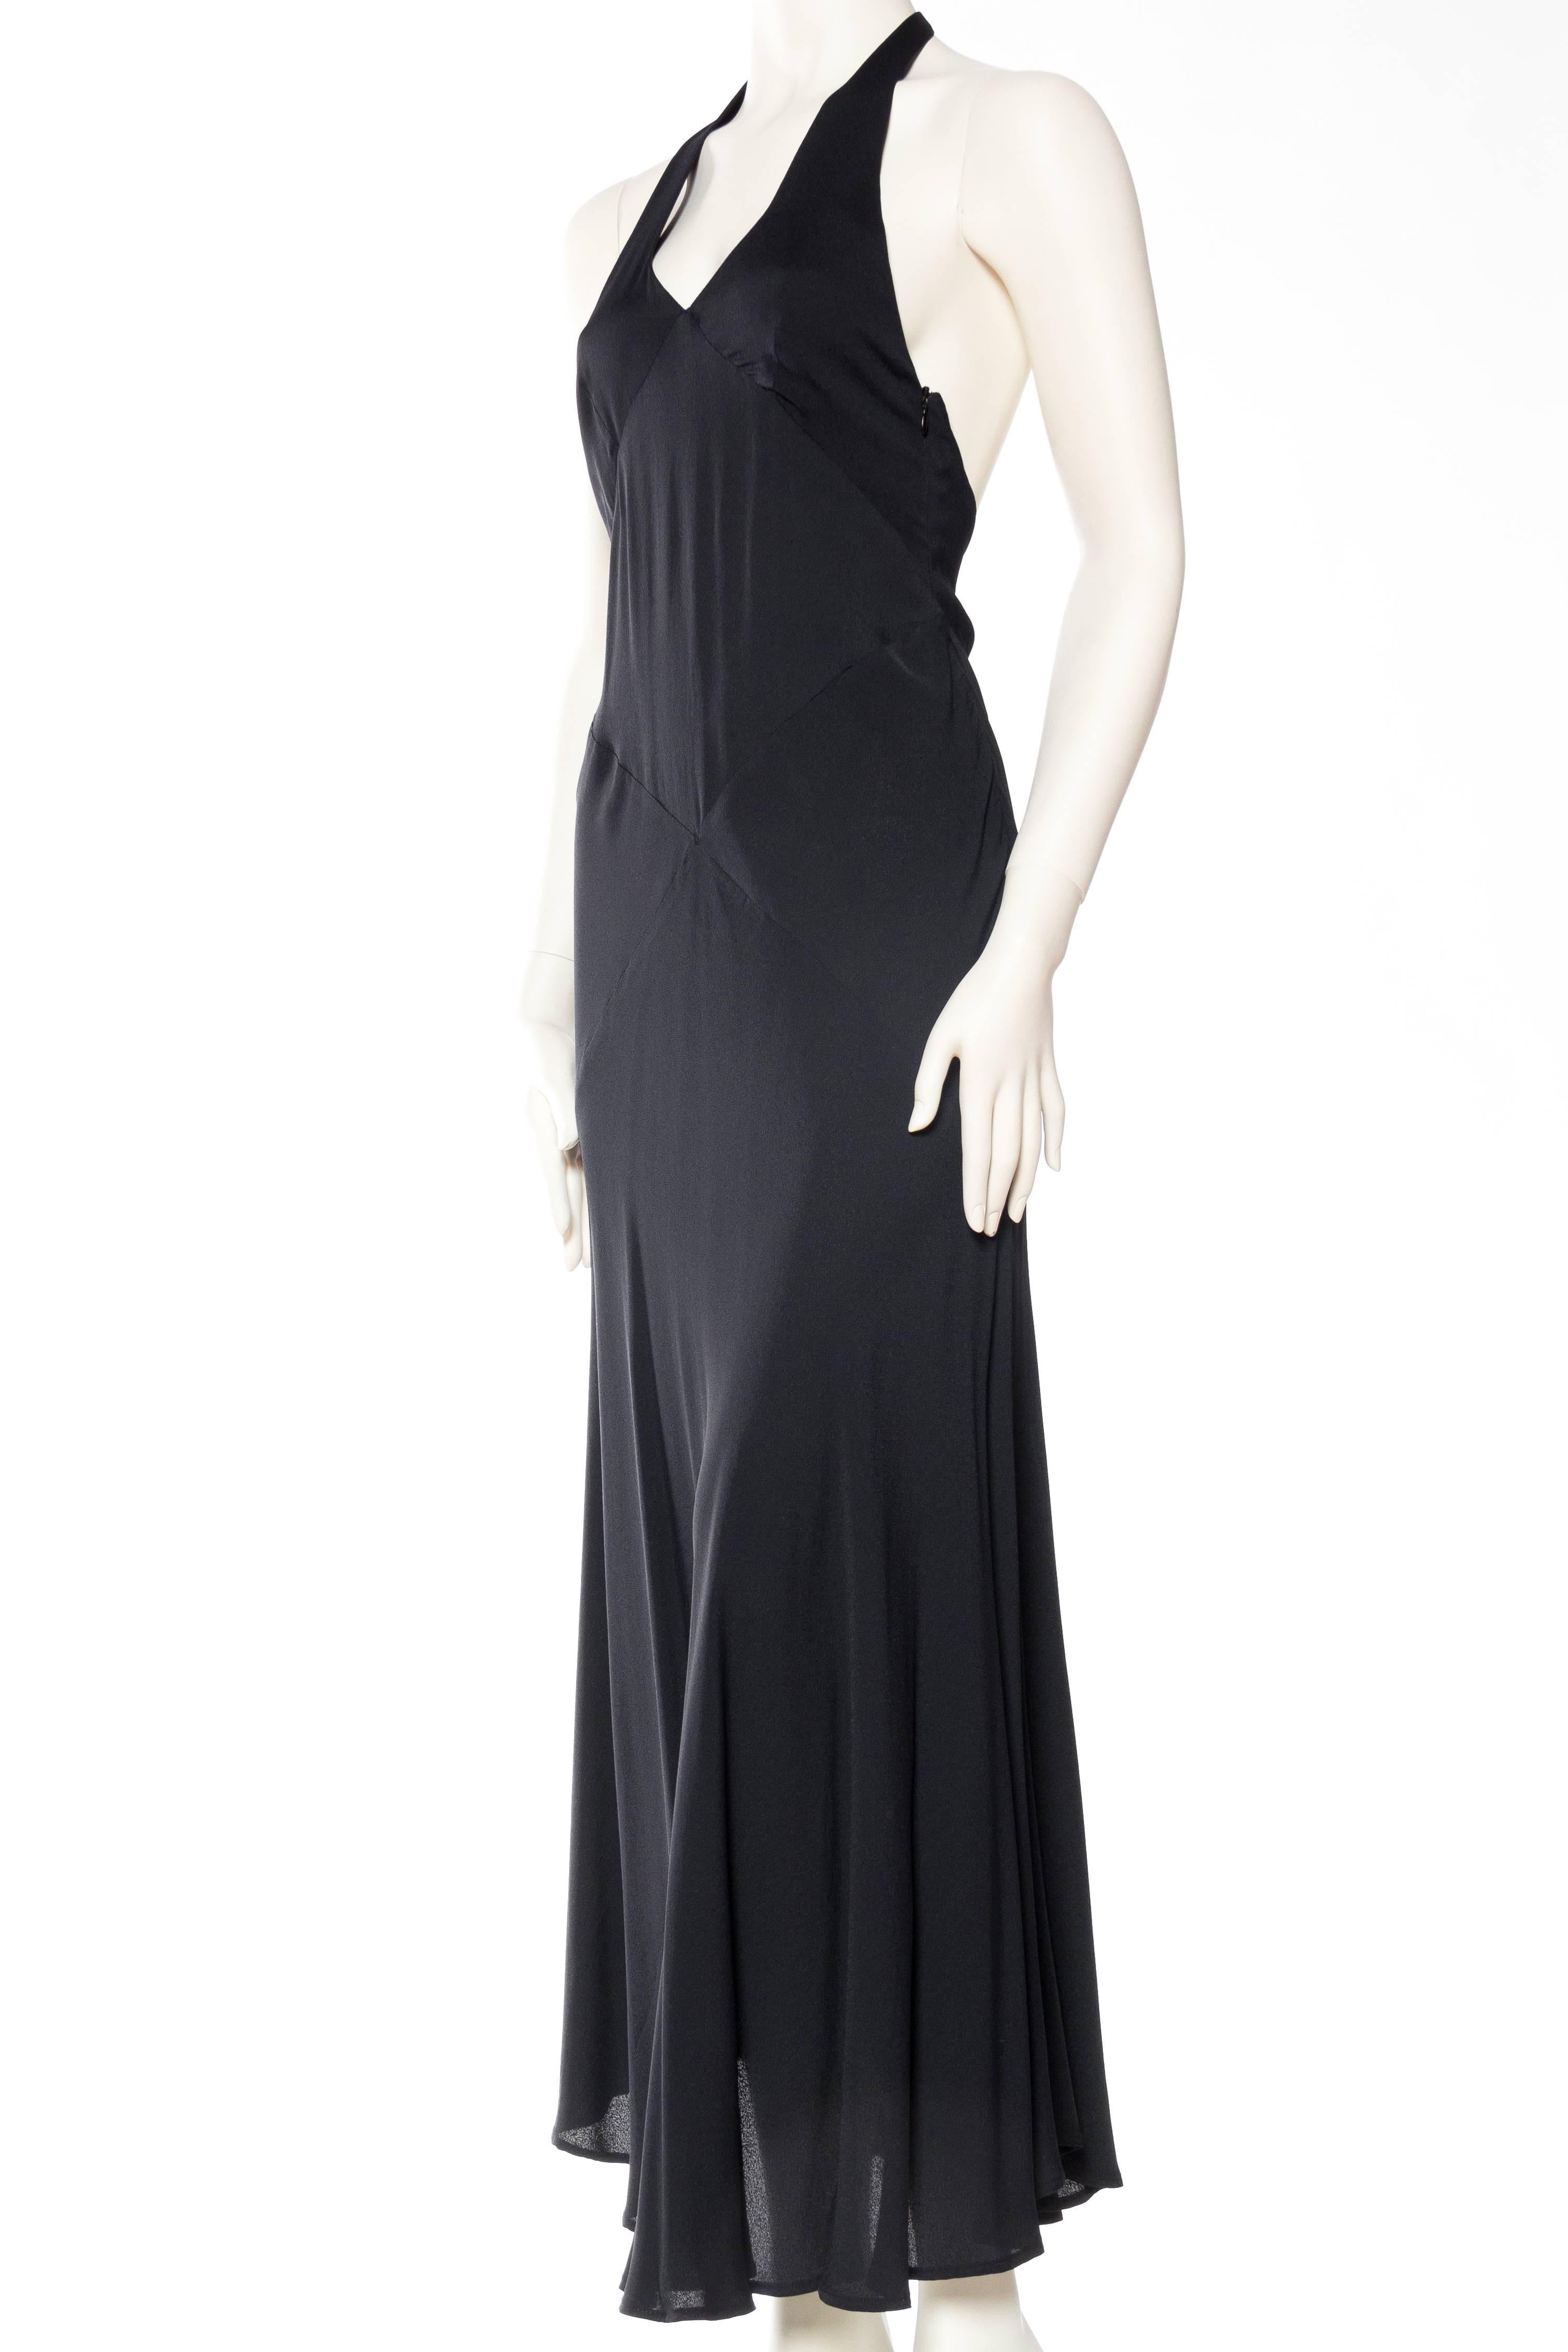 Women's 1990s Katharine Hamnett Black Bias Cut Rayon Crepe Backless 30s style Gown